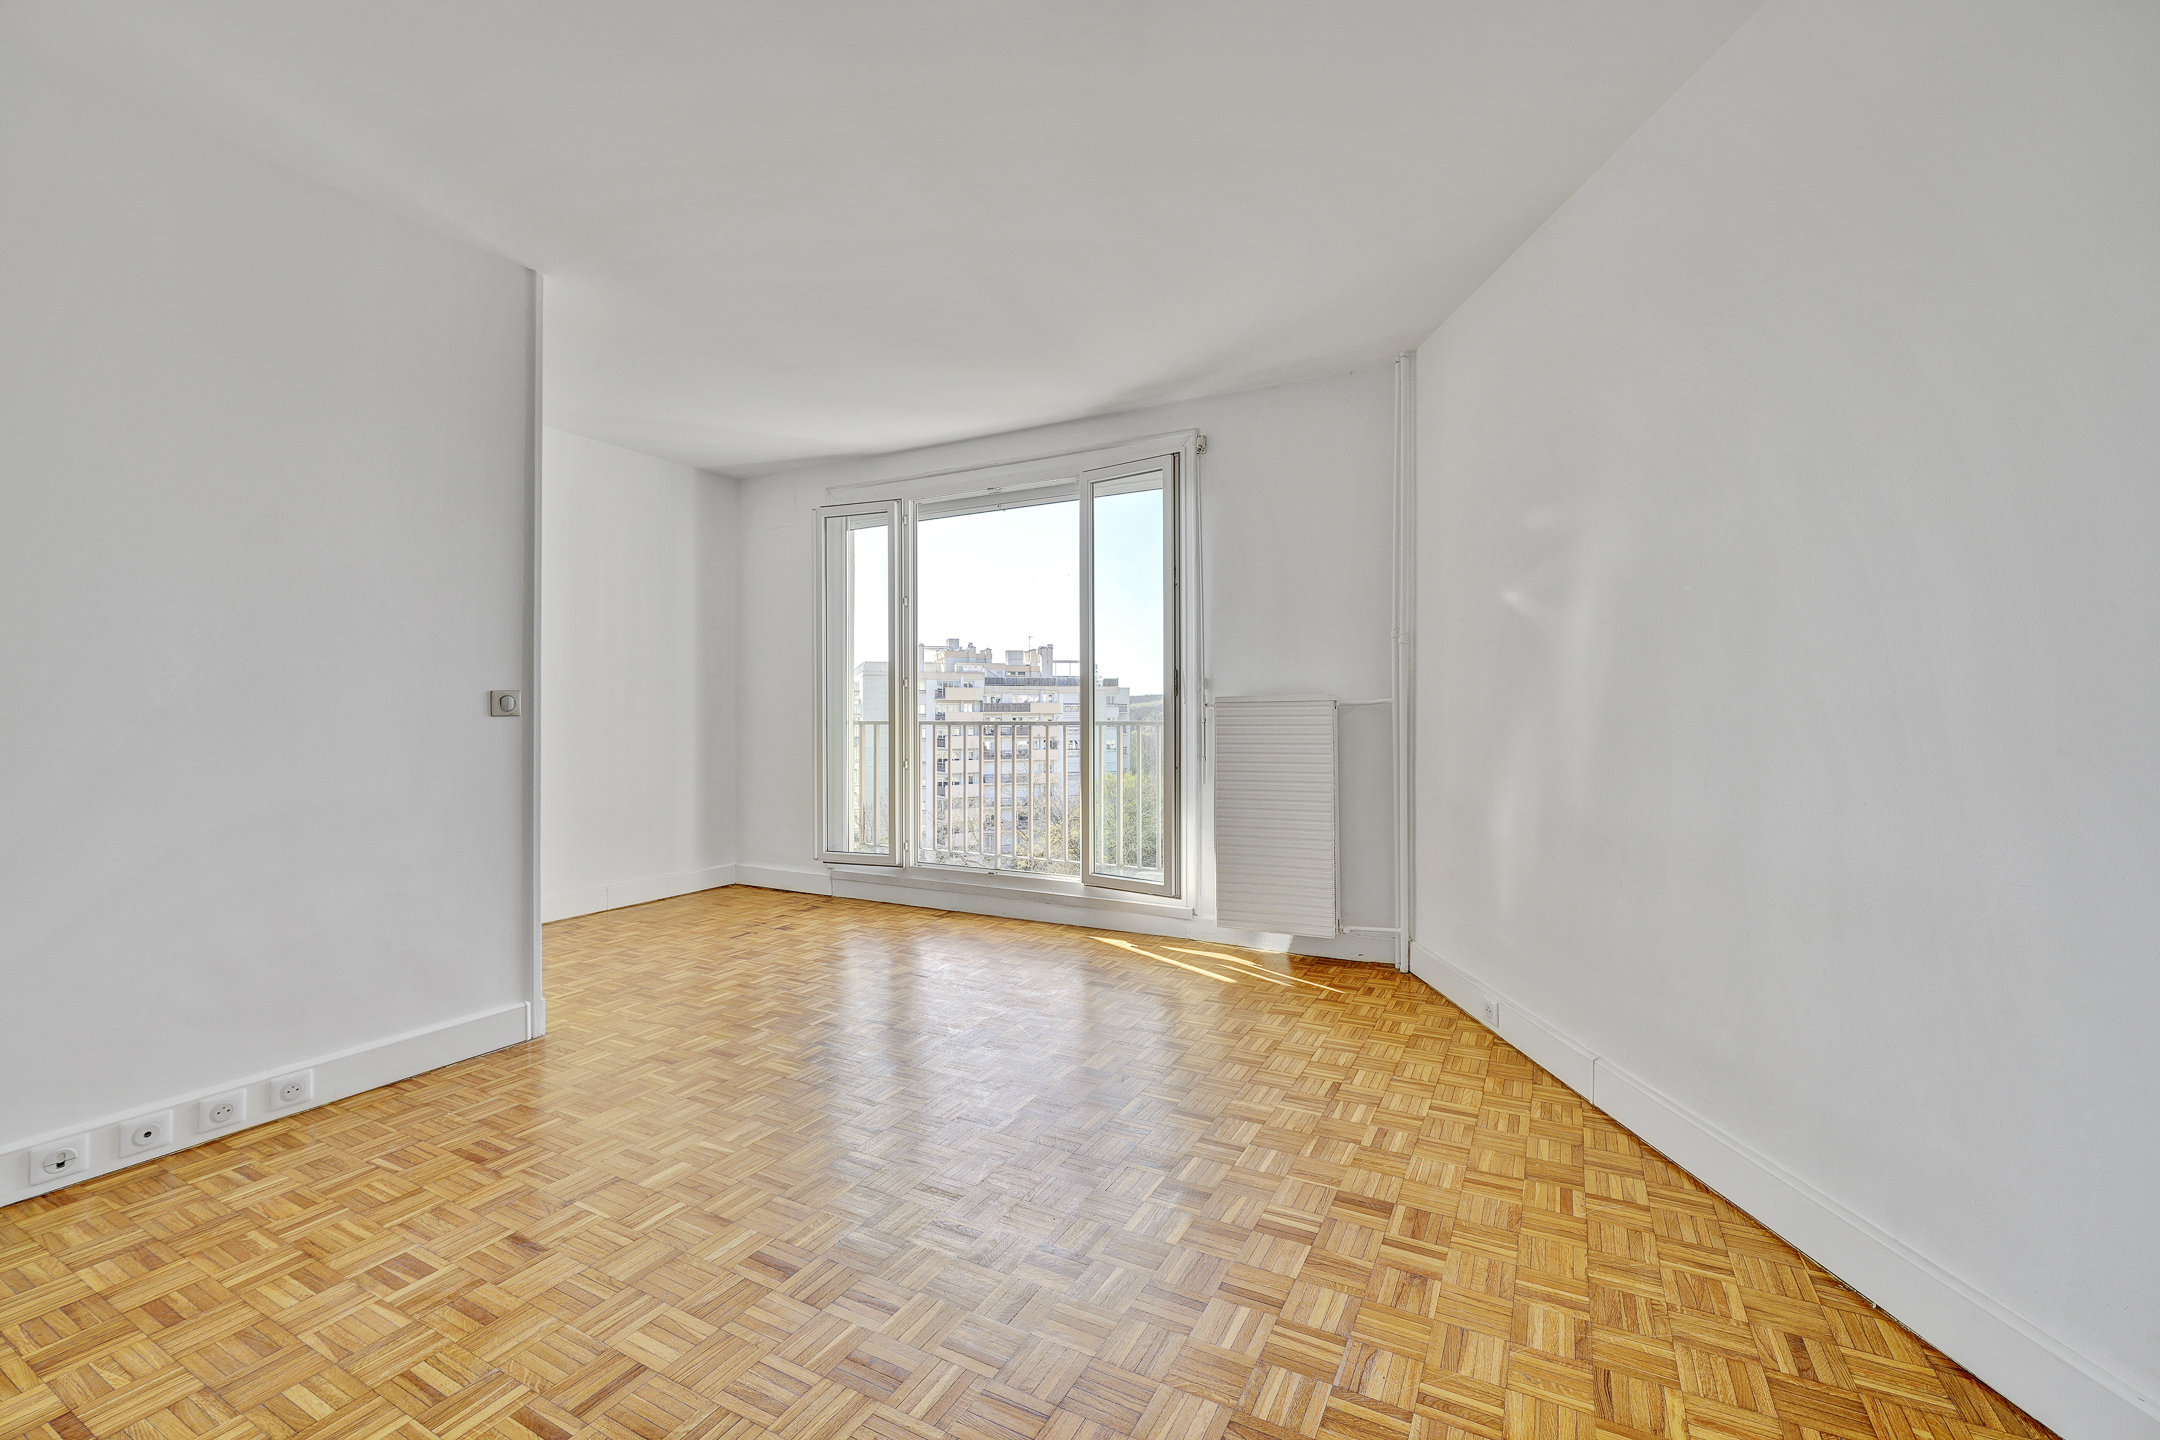 Appartement a louer ville-d'avray - 1 pièce(s) - 26 m2 - Surfyn